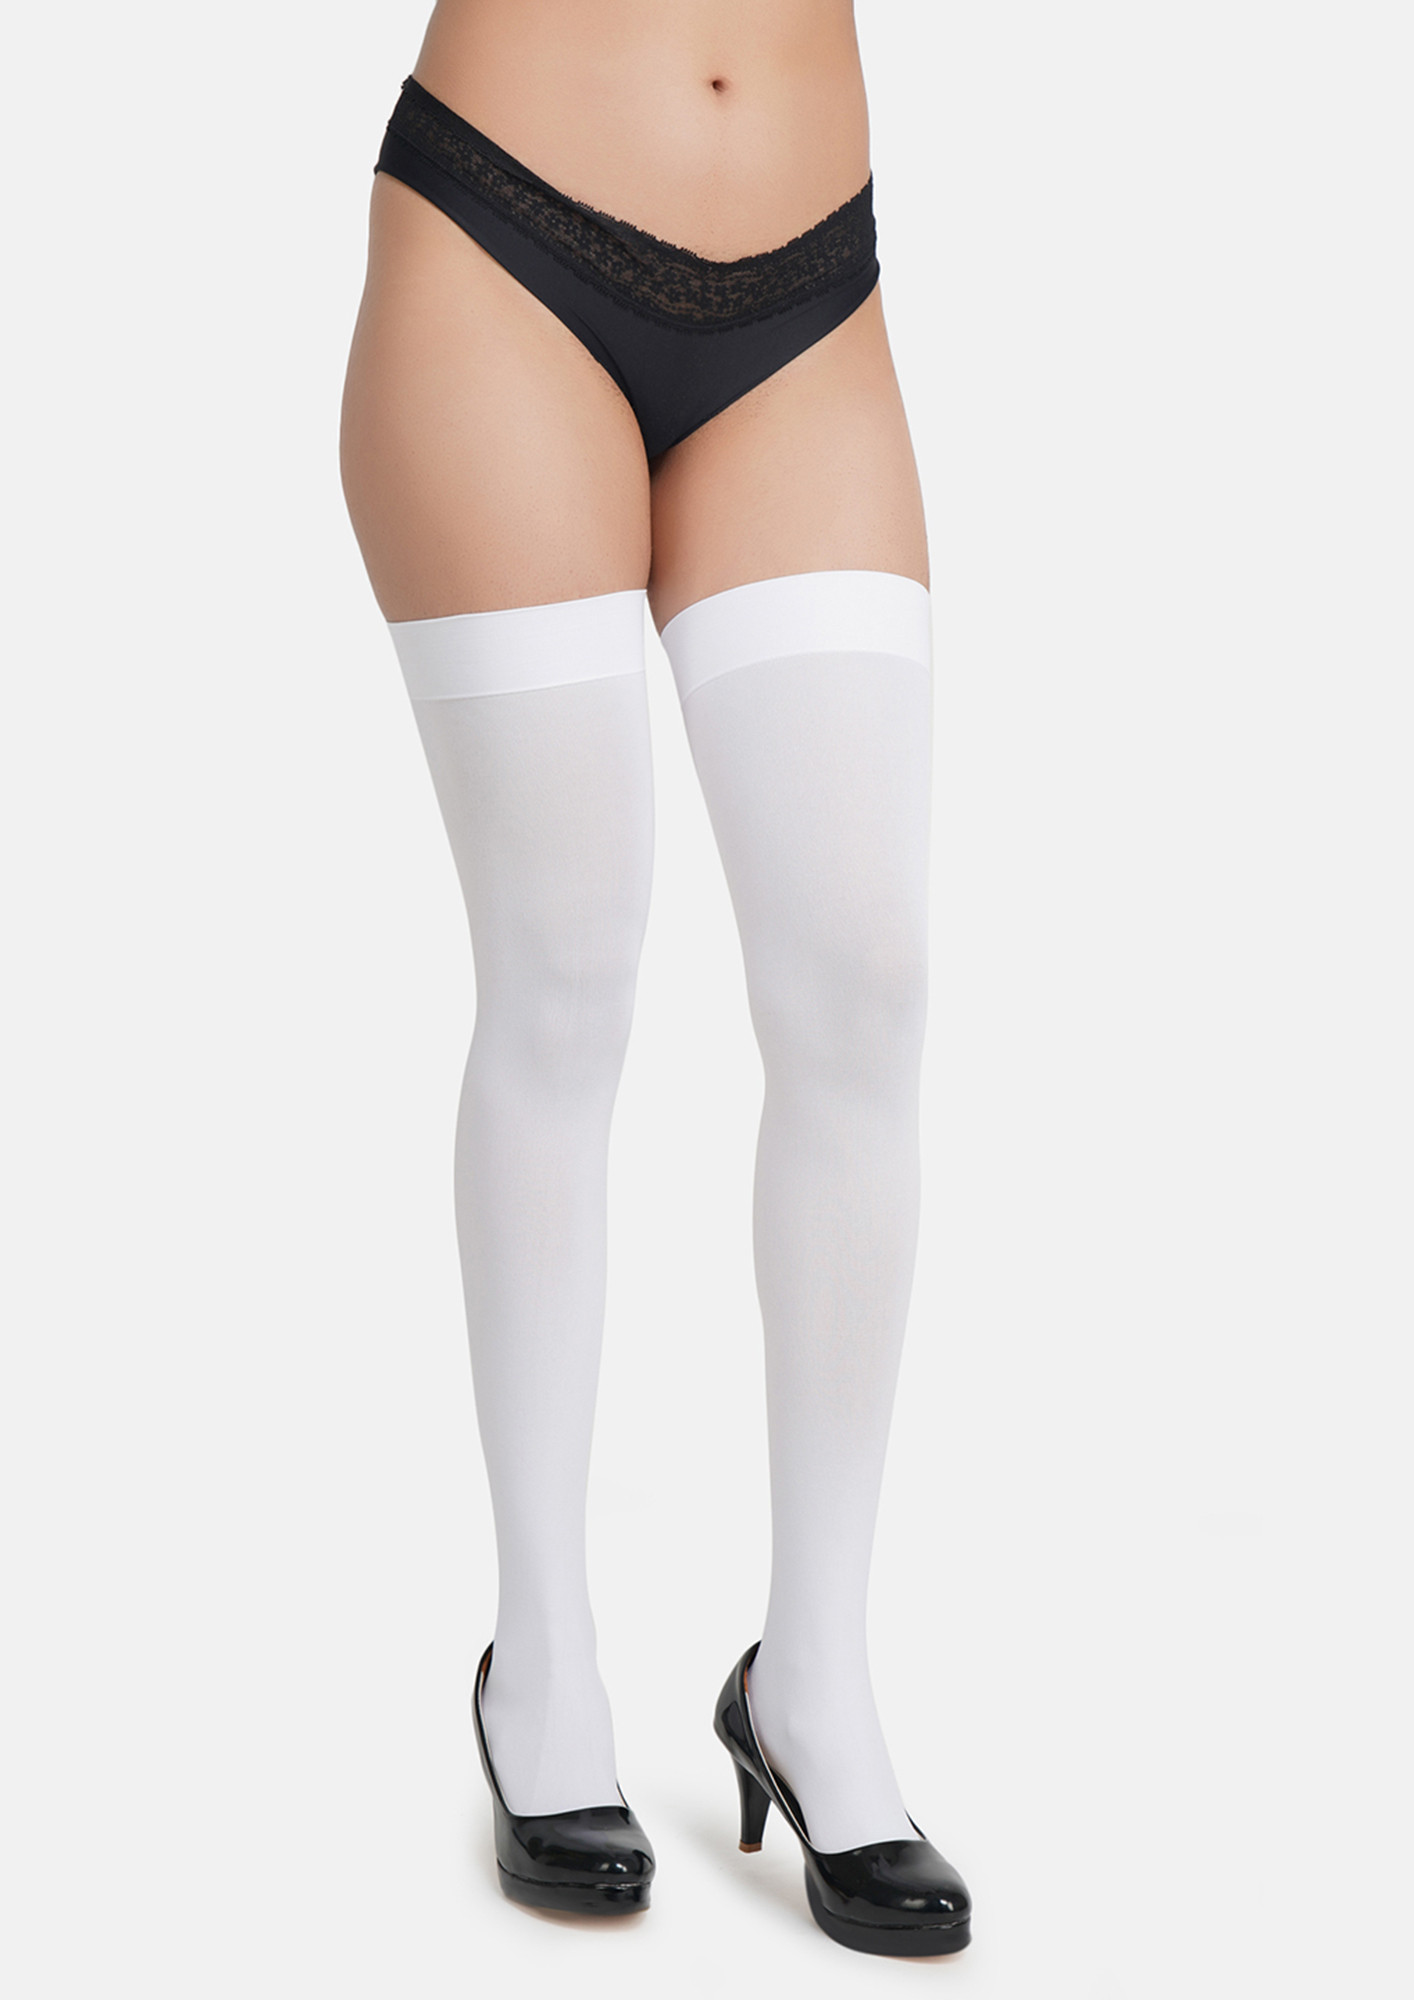 N2S NEXT2SKIN Women's Thigh High Opaque Stockings (White)